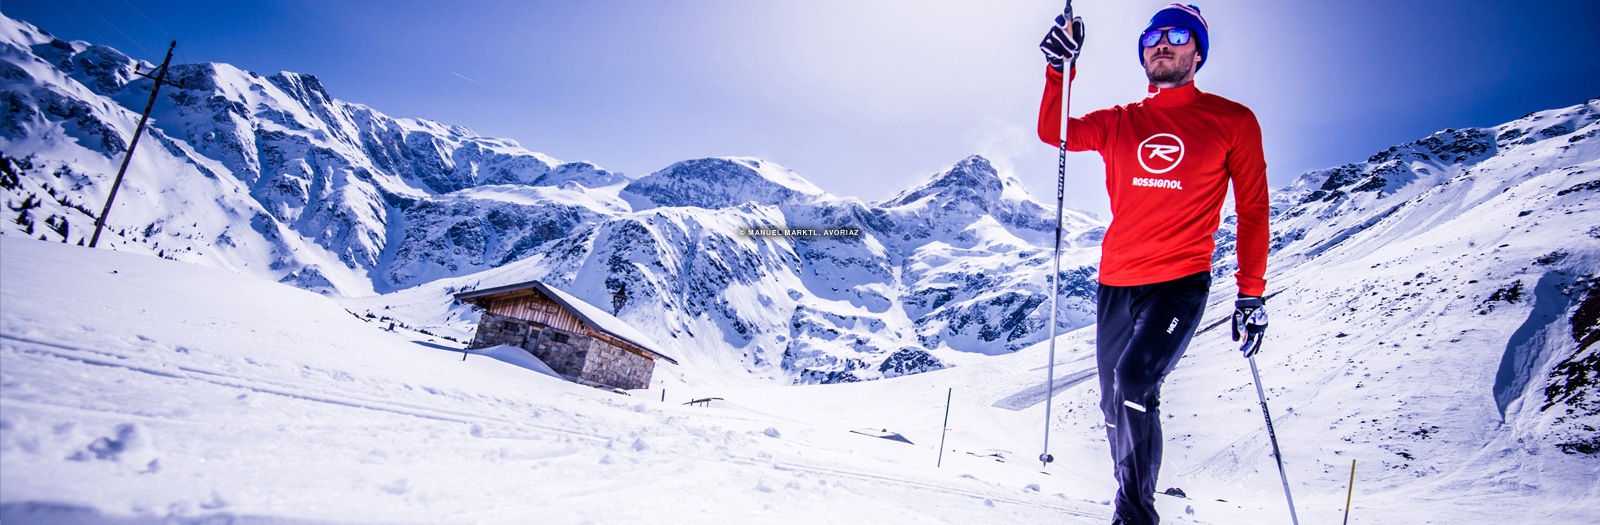 Bad Gastein austria, ski vacation packages, austria ski abroad